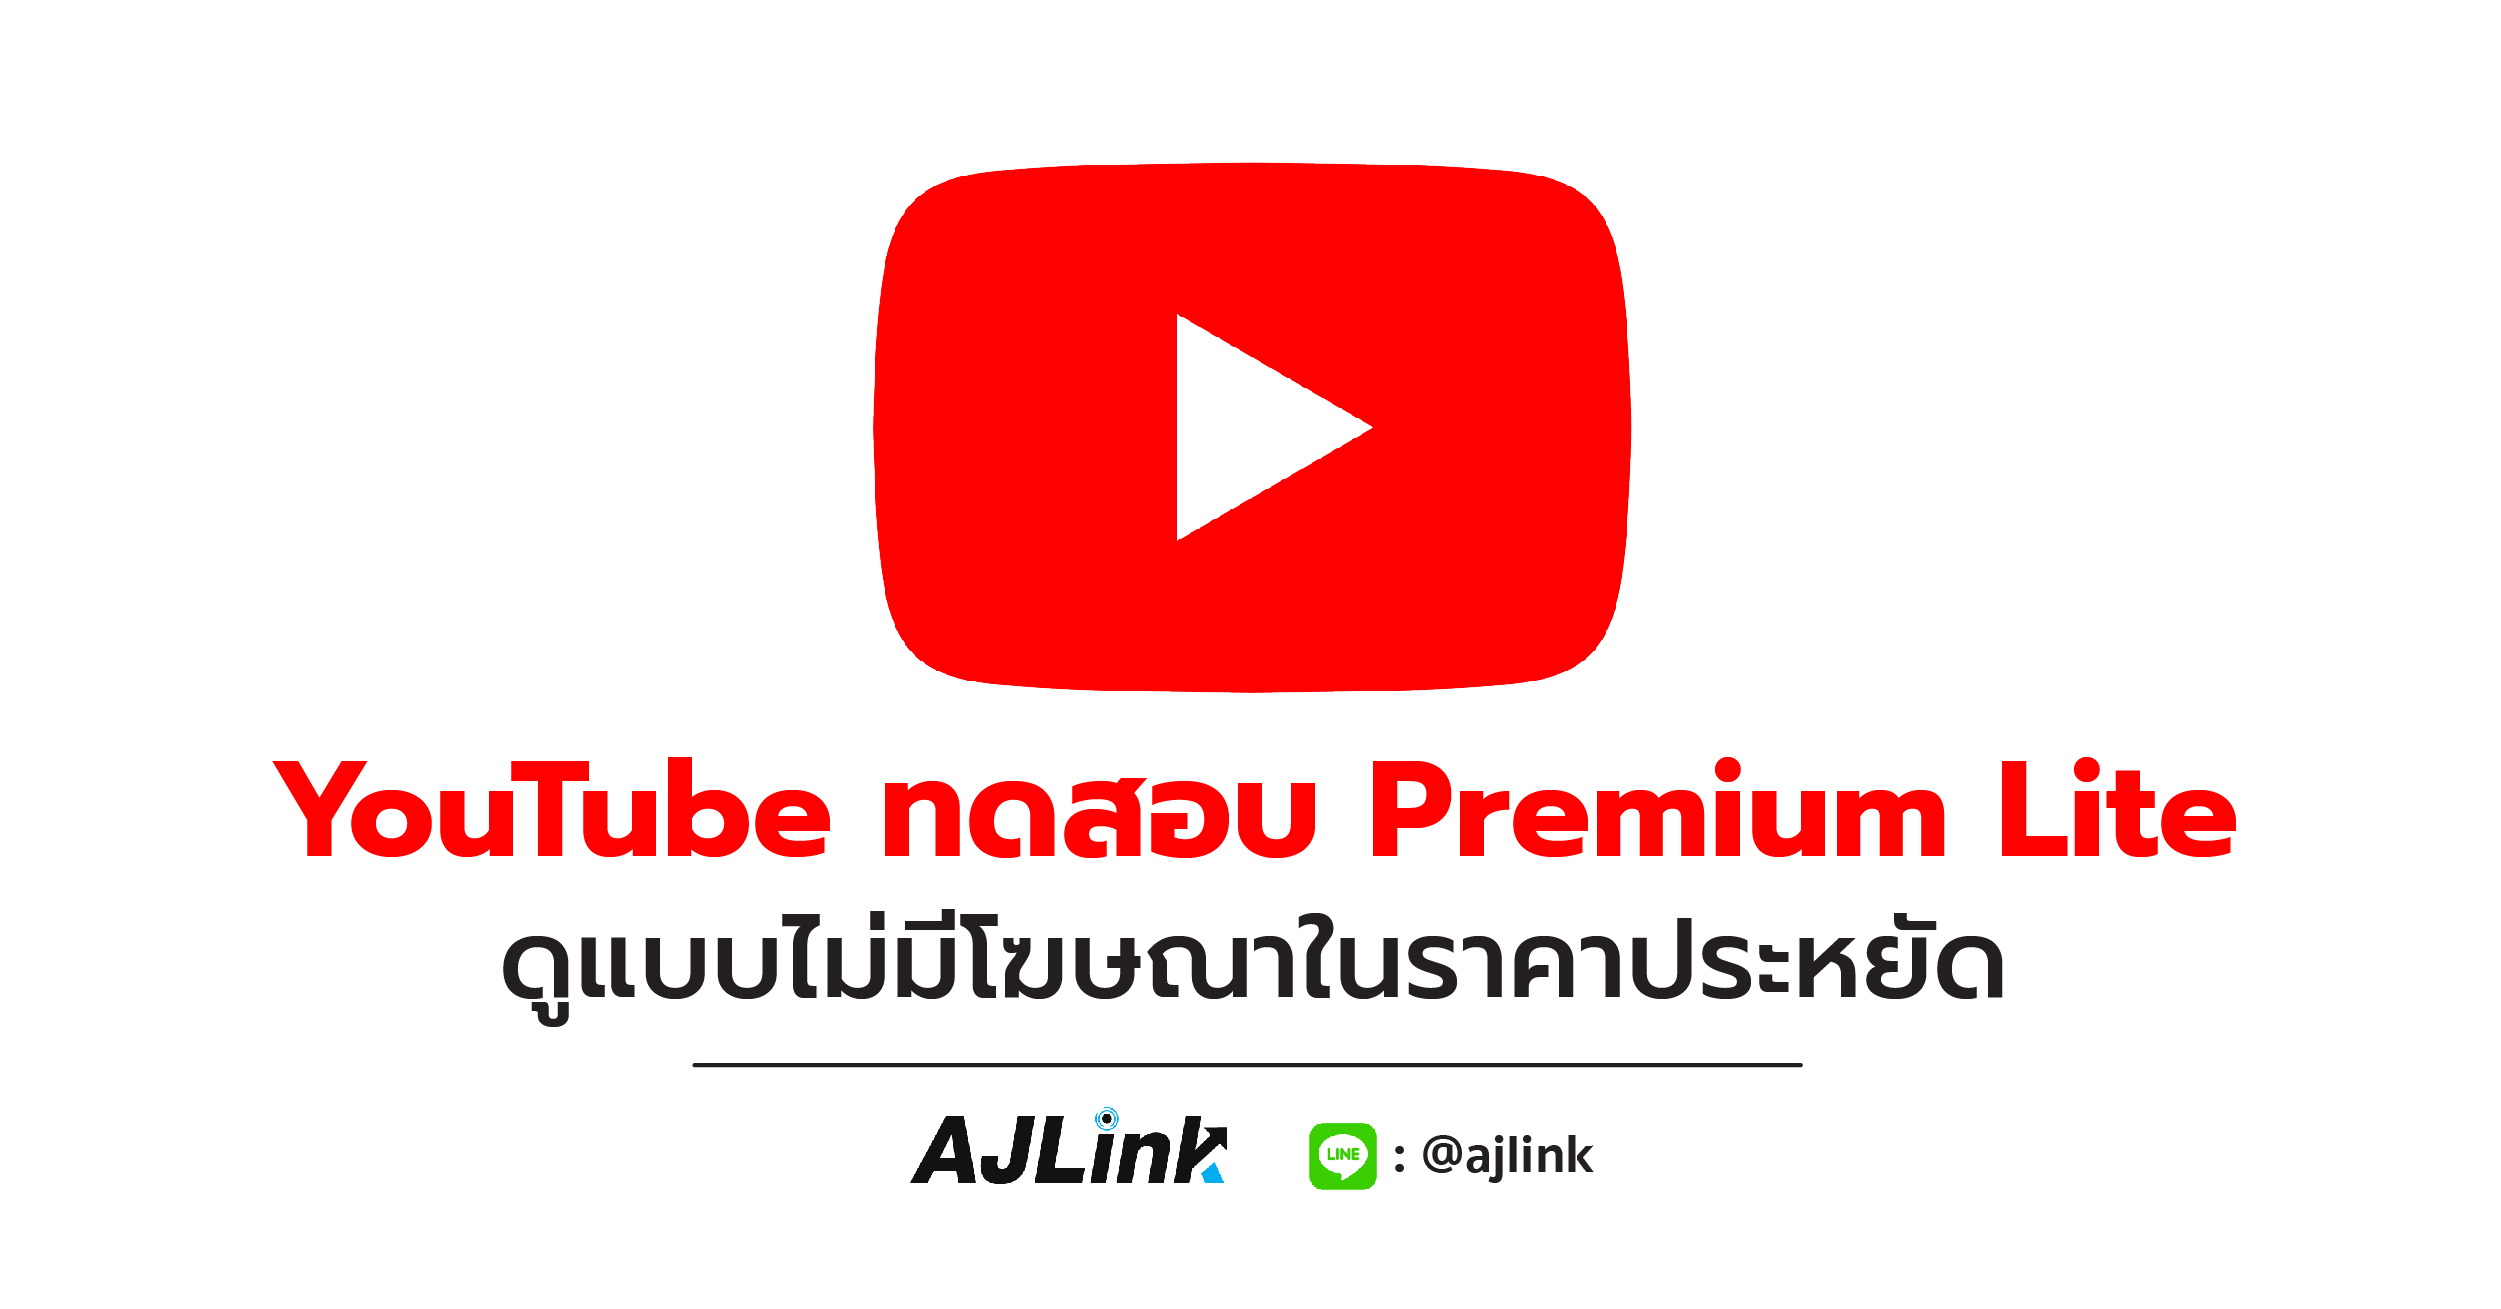 YouTube ทดสอบ Premium Lite ดูแบบไม่มีโฆษณาในราคาประหยัด